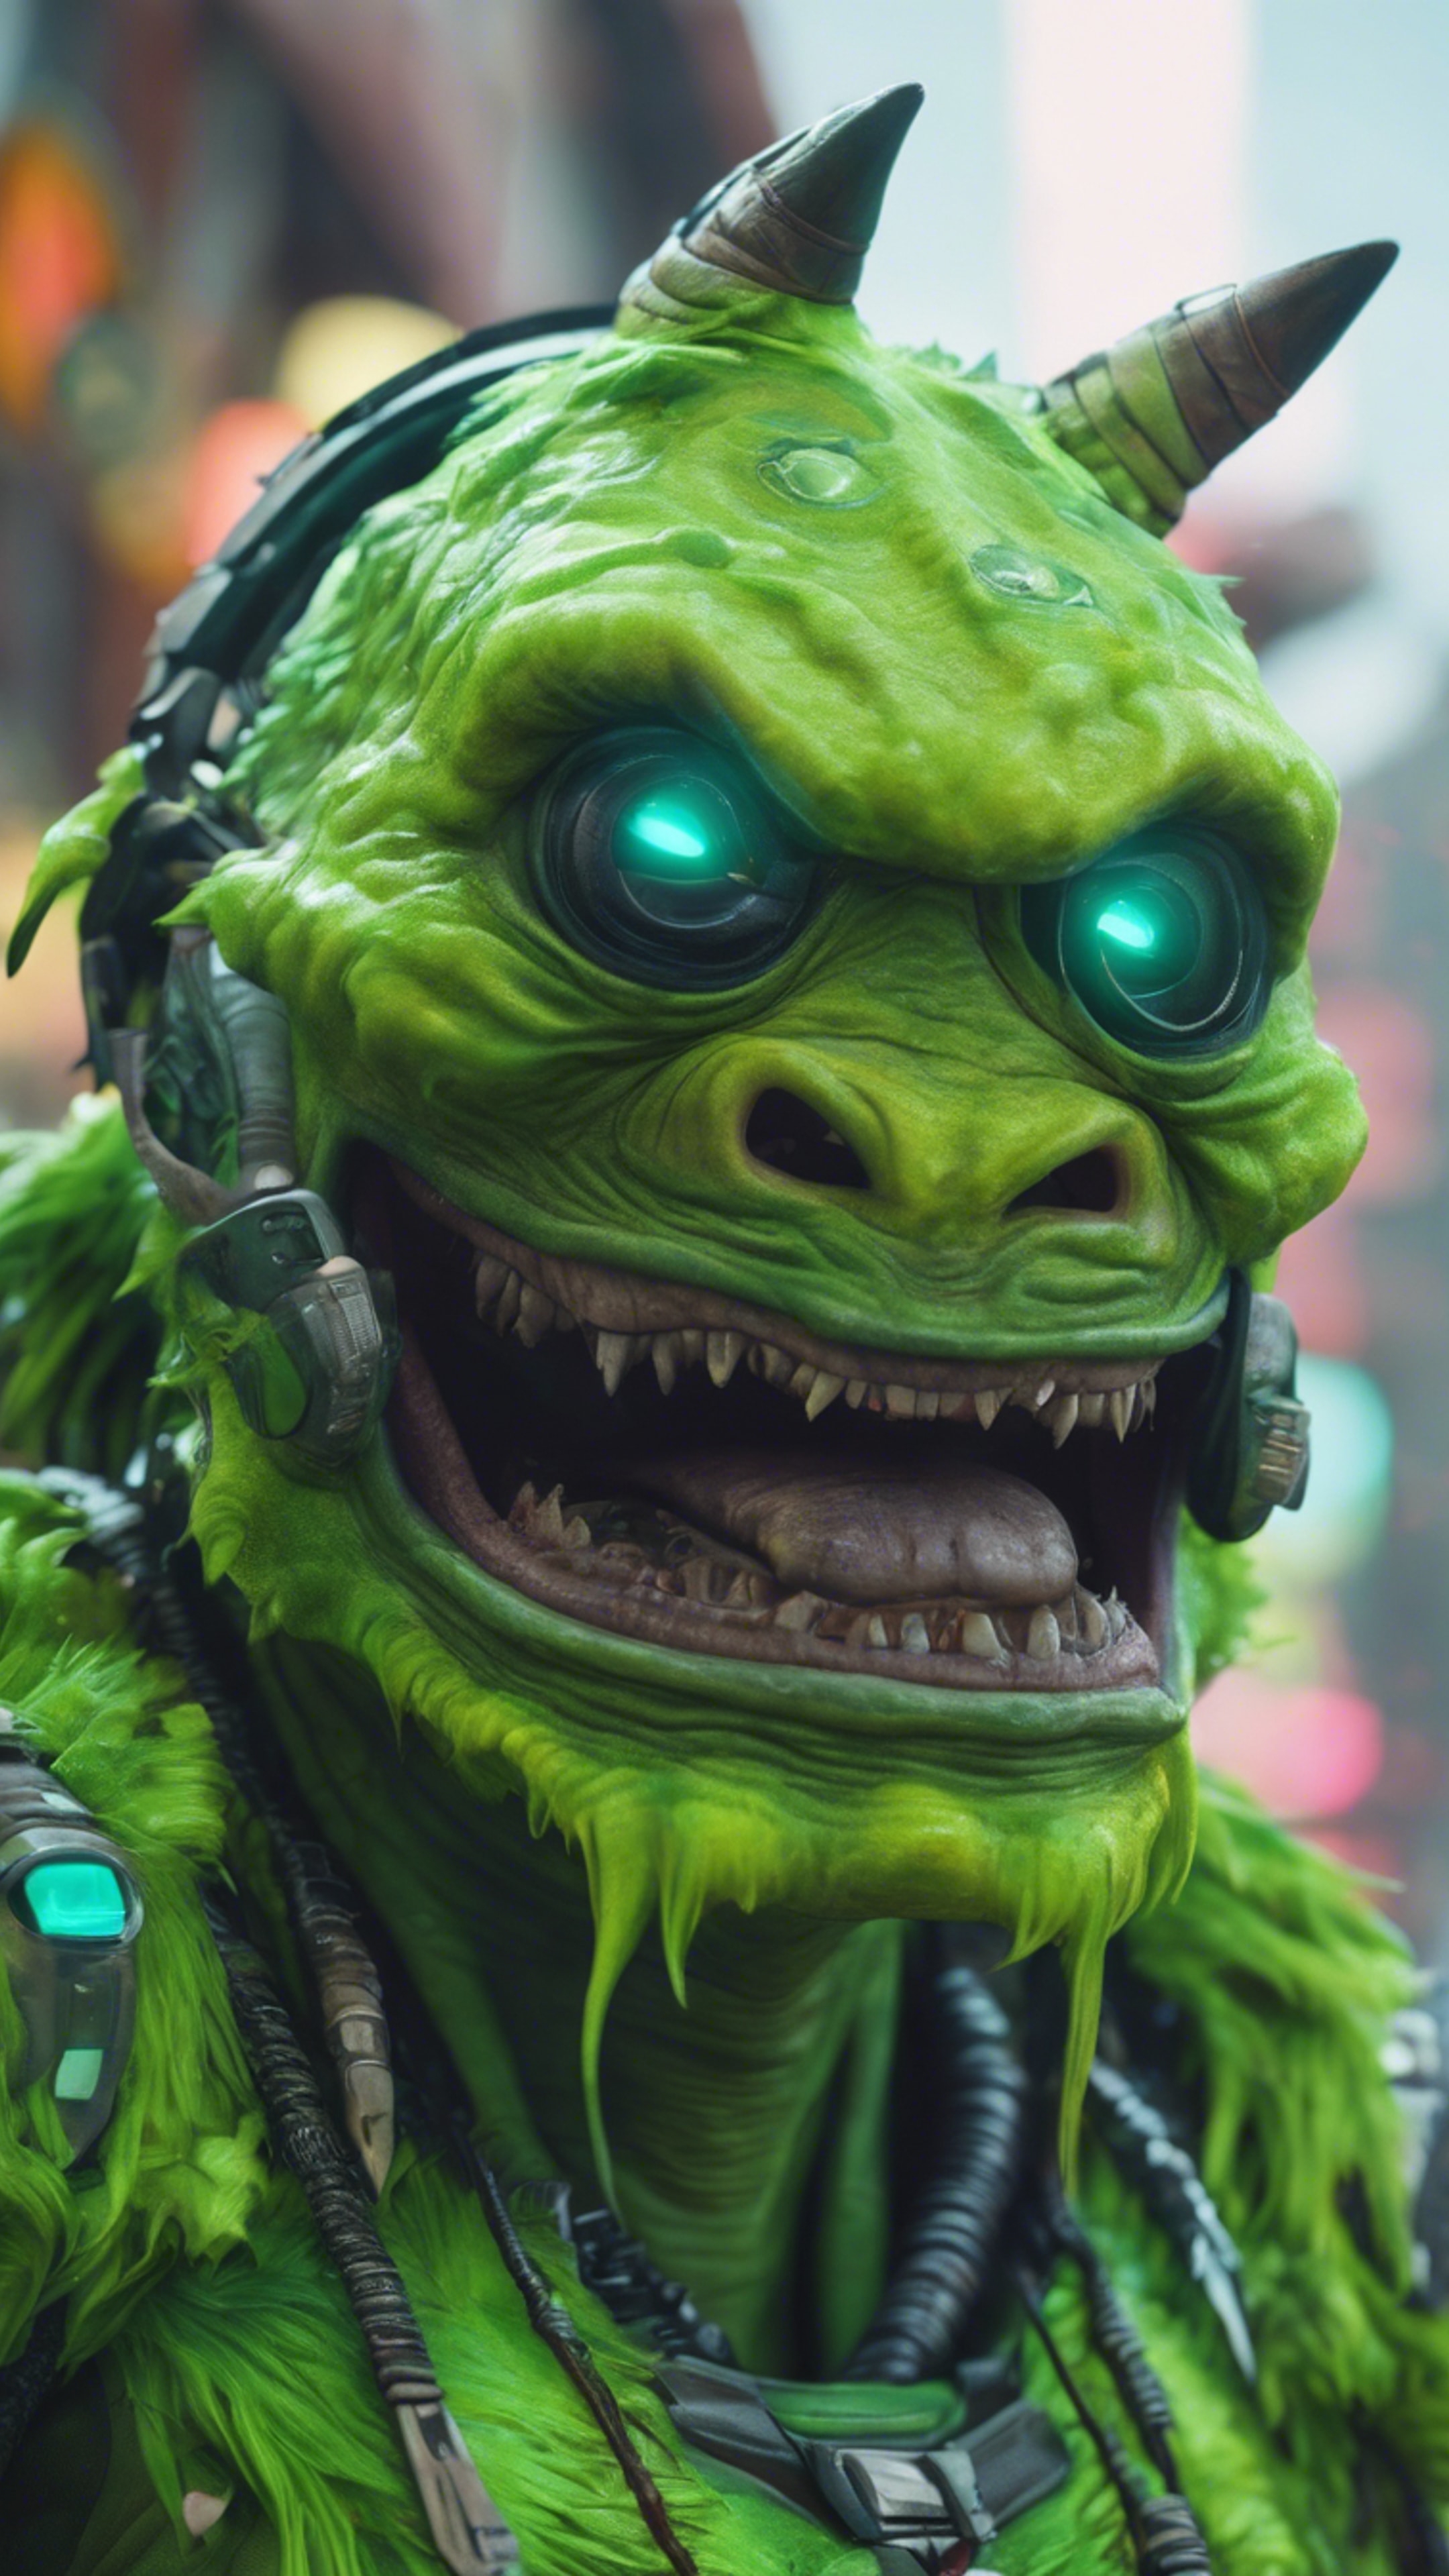 A neon green monster avatar in a popular video game Wallpaper[af5fbbdb1ec04a35bd90]